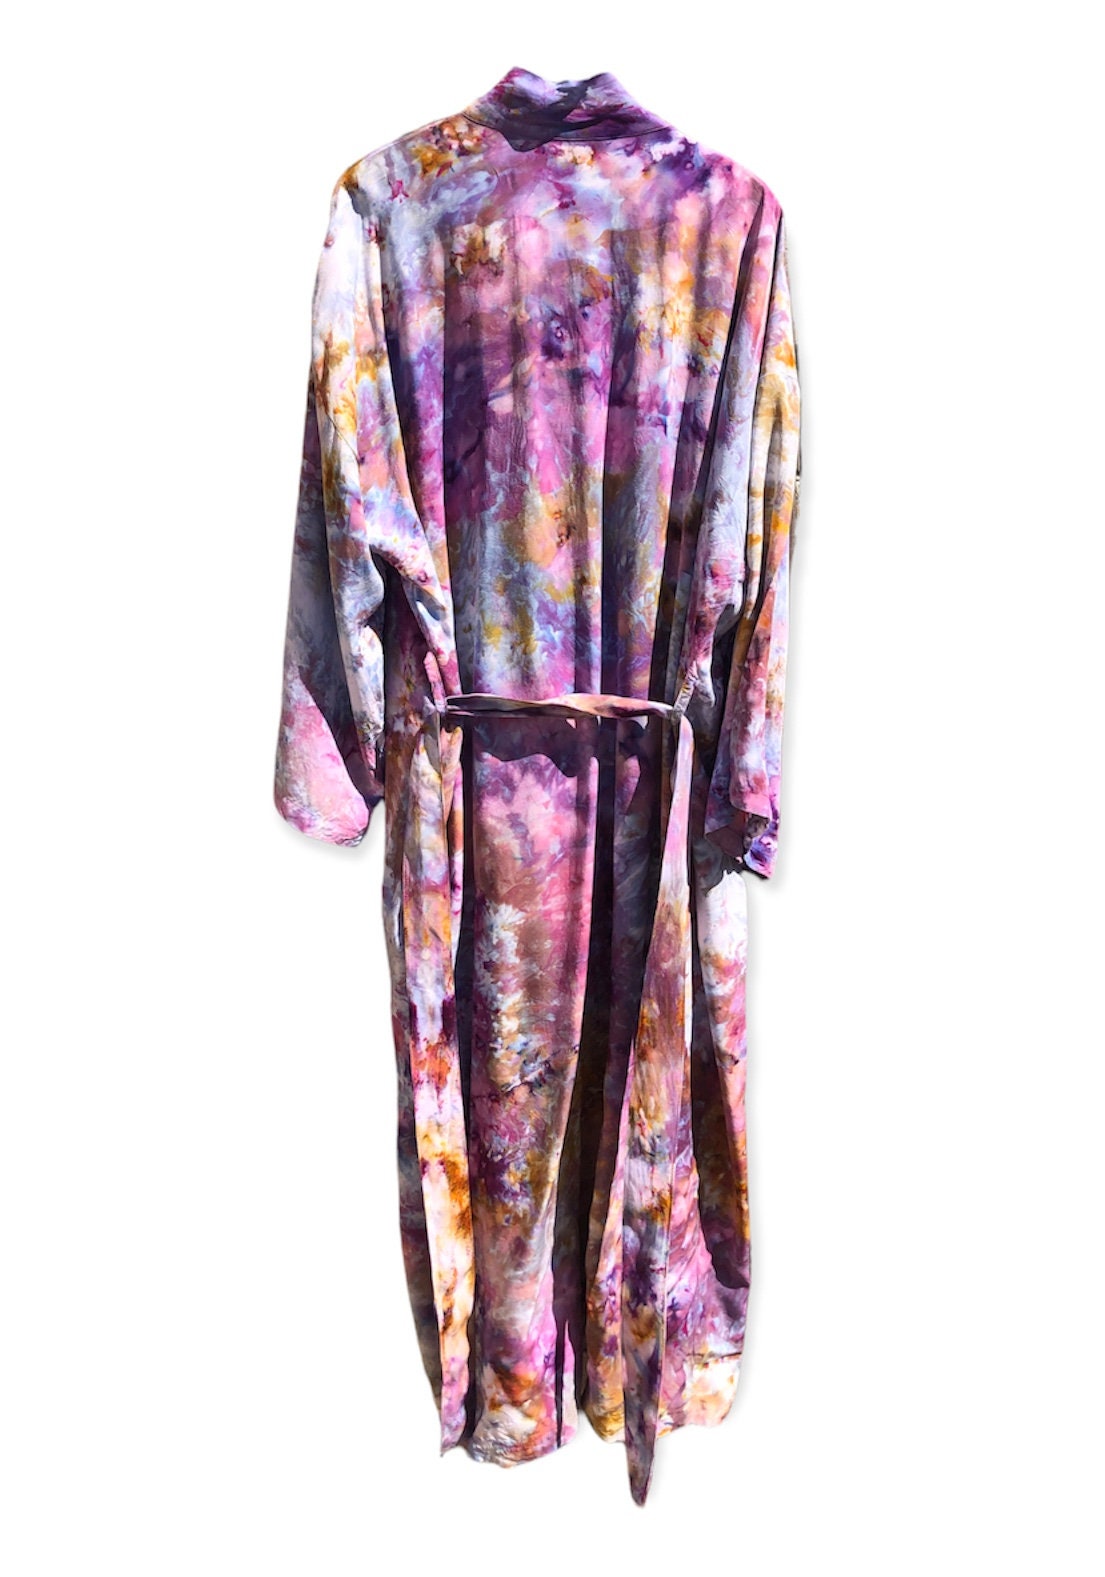 TAOS Ice Dyed Long Kimono Robe Ropa Ropa de género neutro para adultos Pijamas y batas Batas Tocayo Tie Dye Rayon Duster w Cinturón 